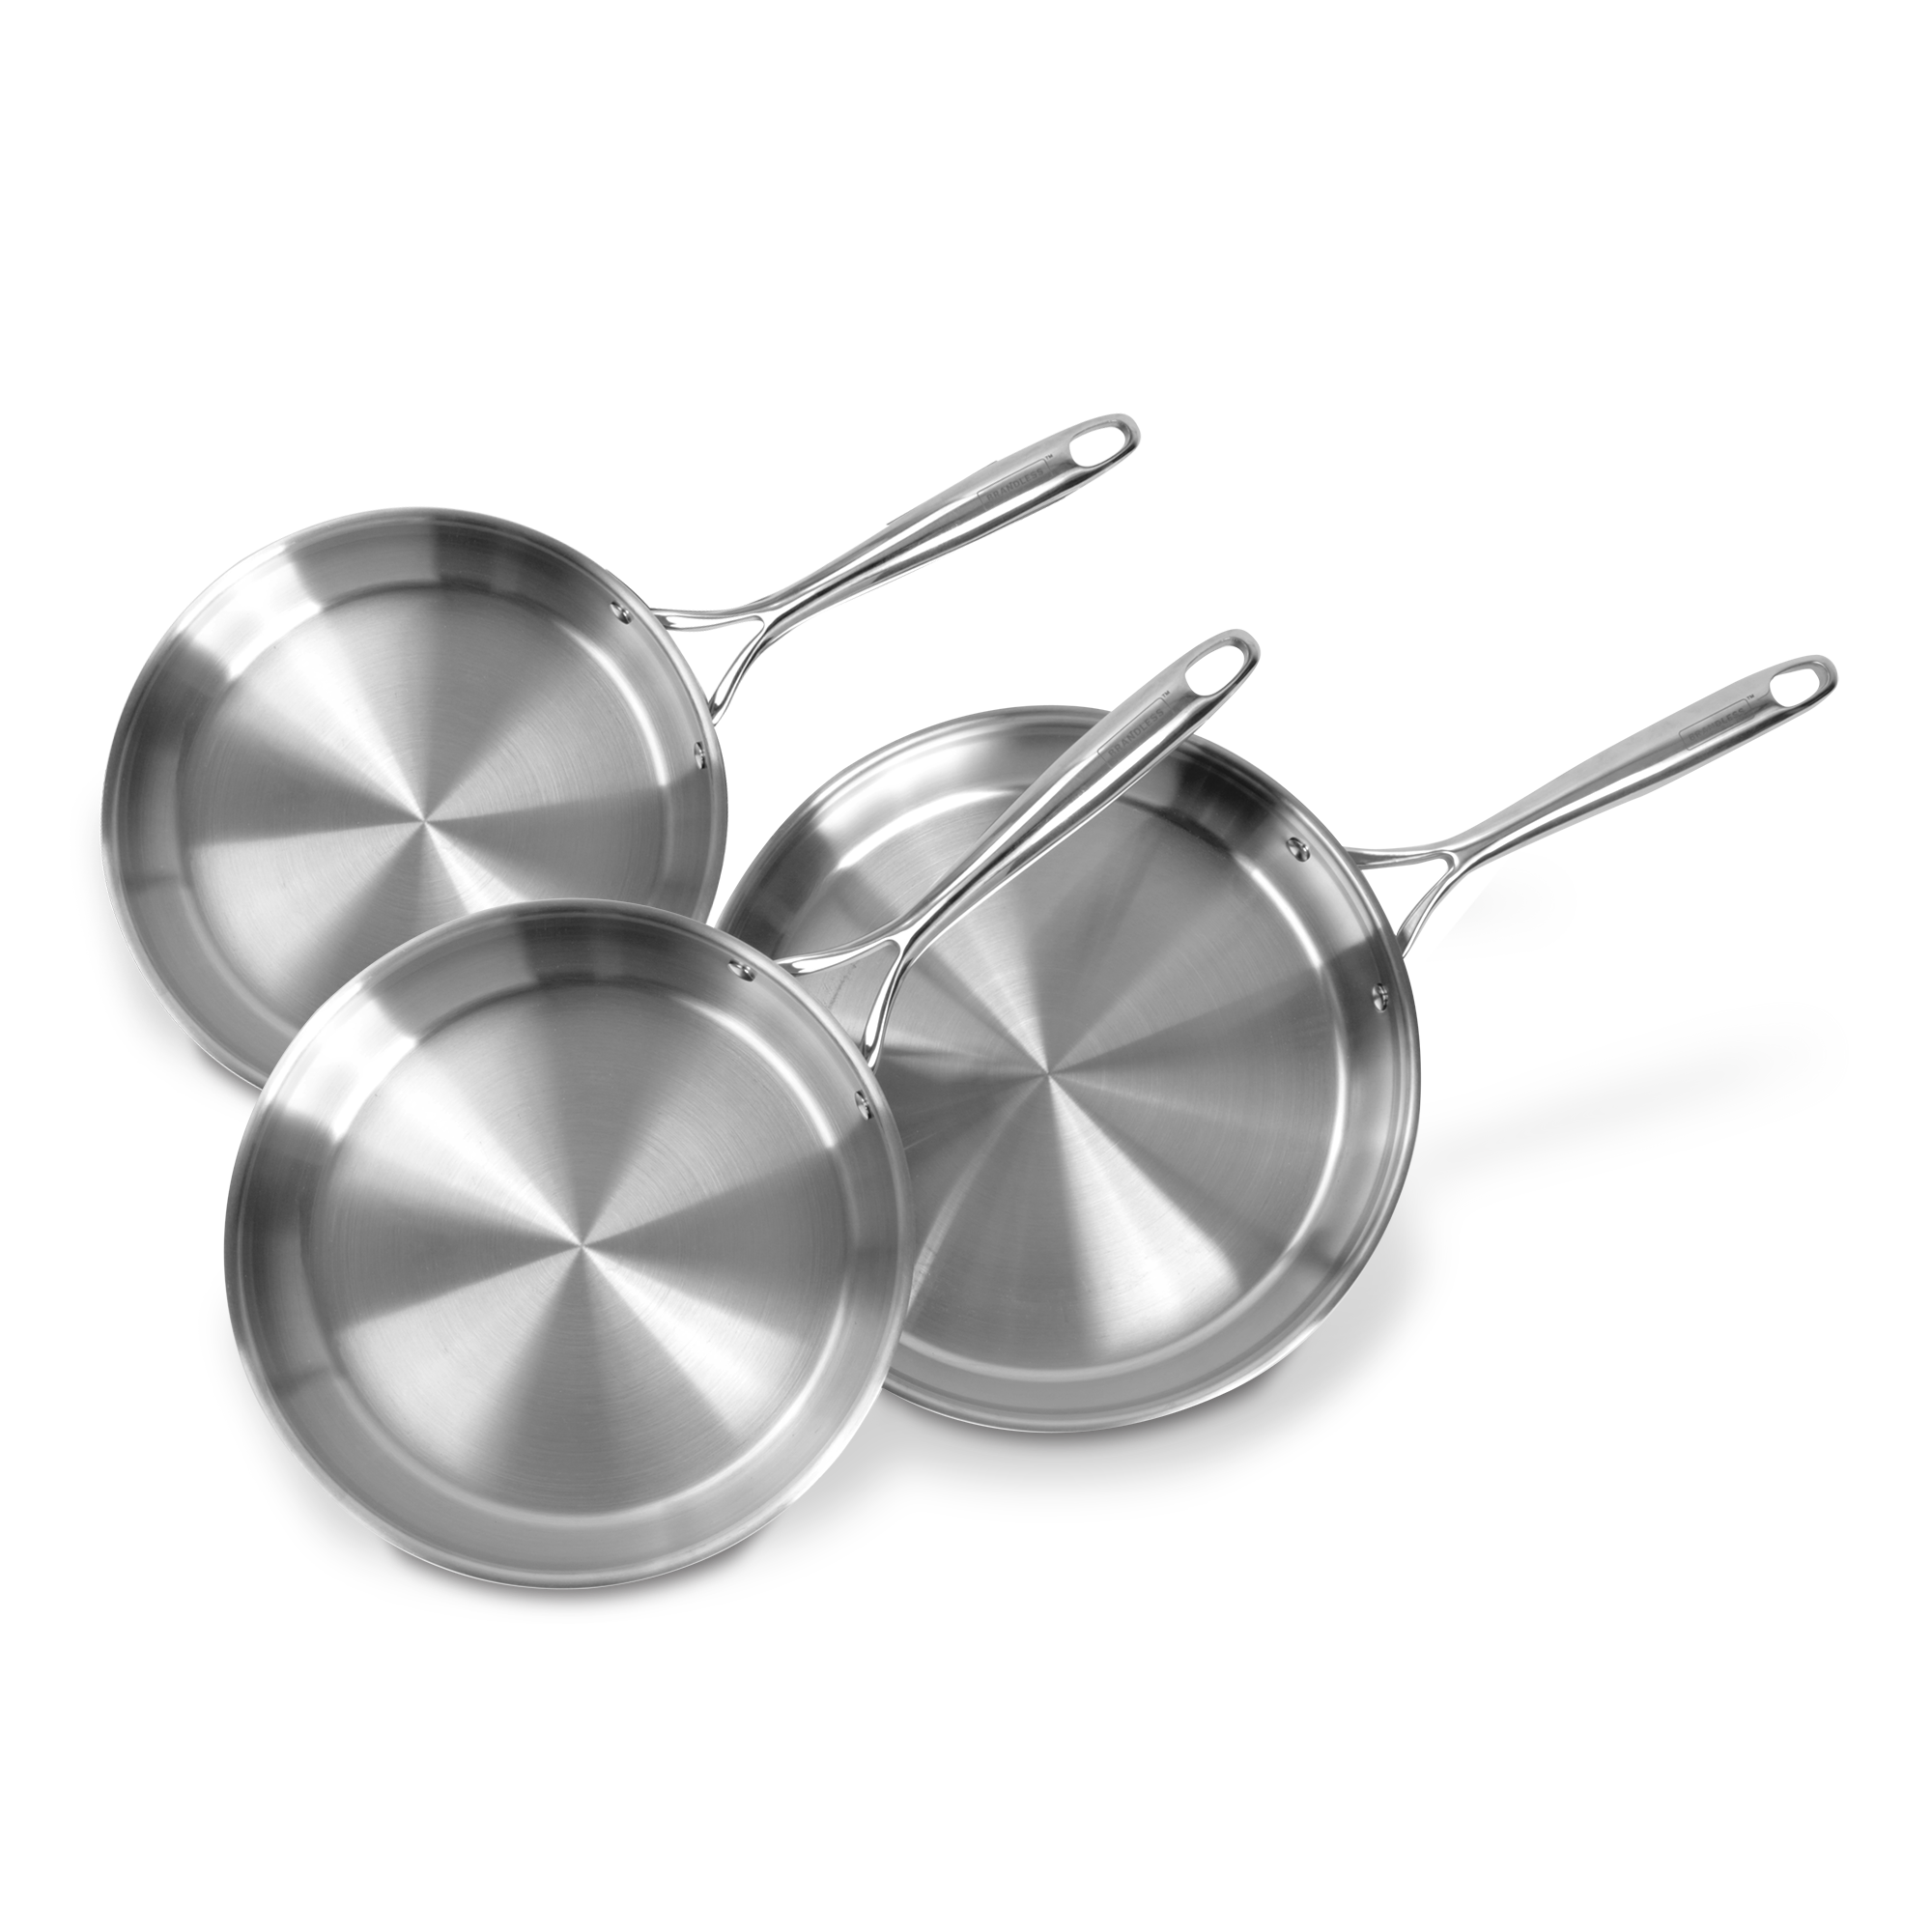 3 frying pans